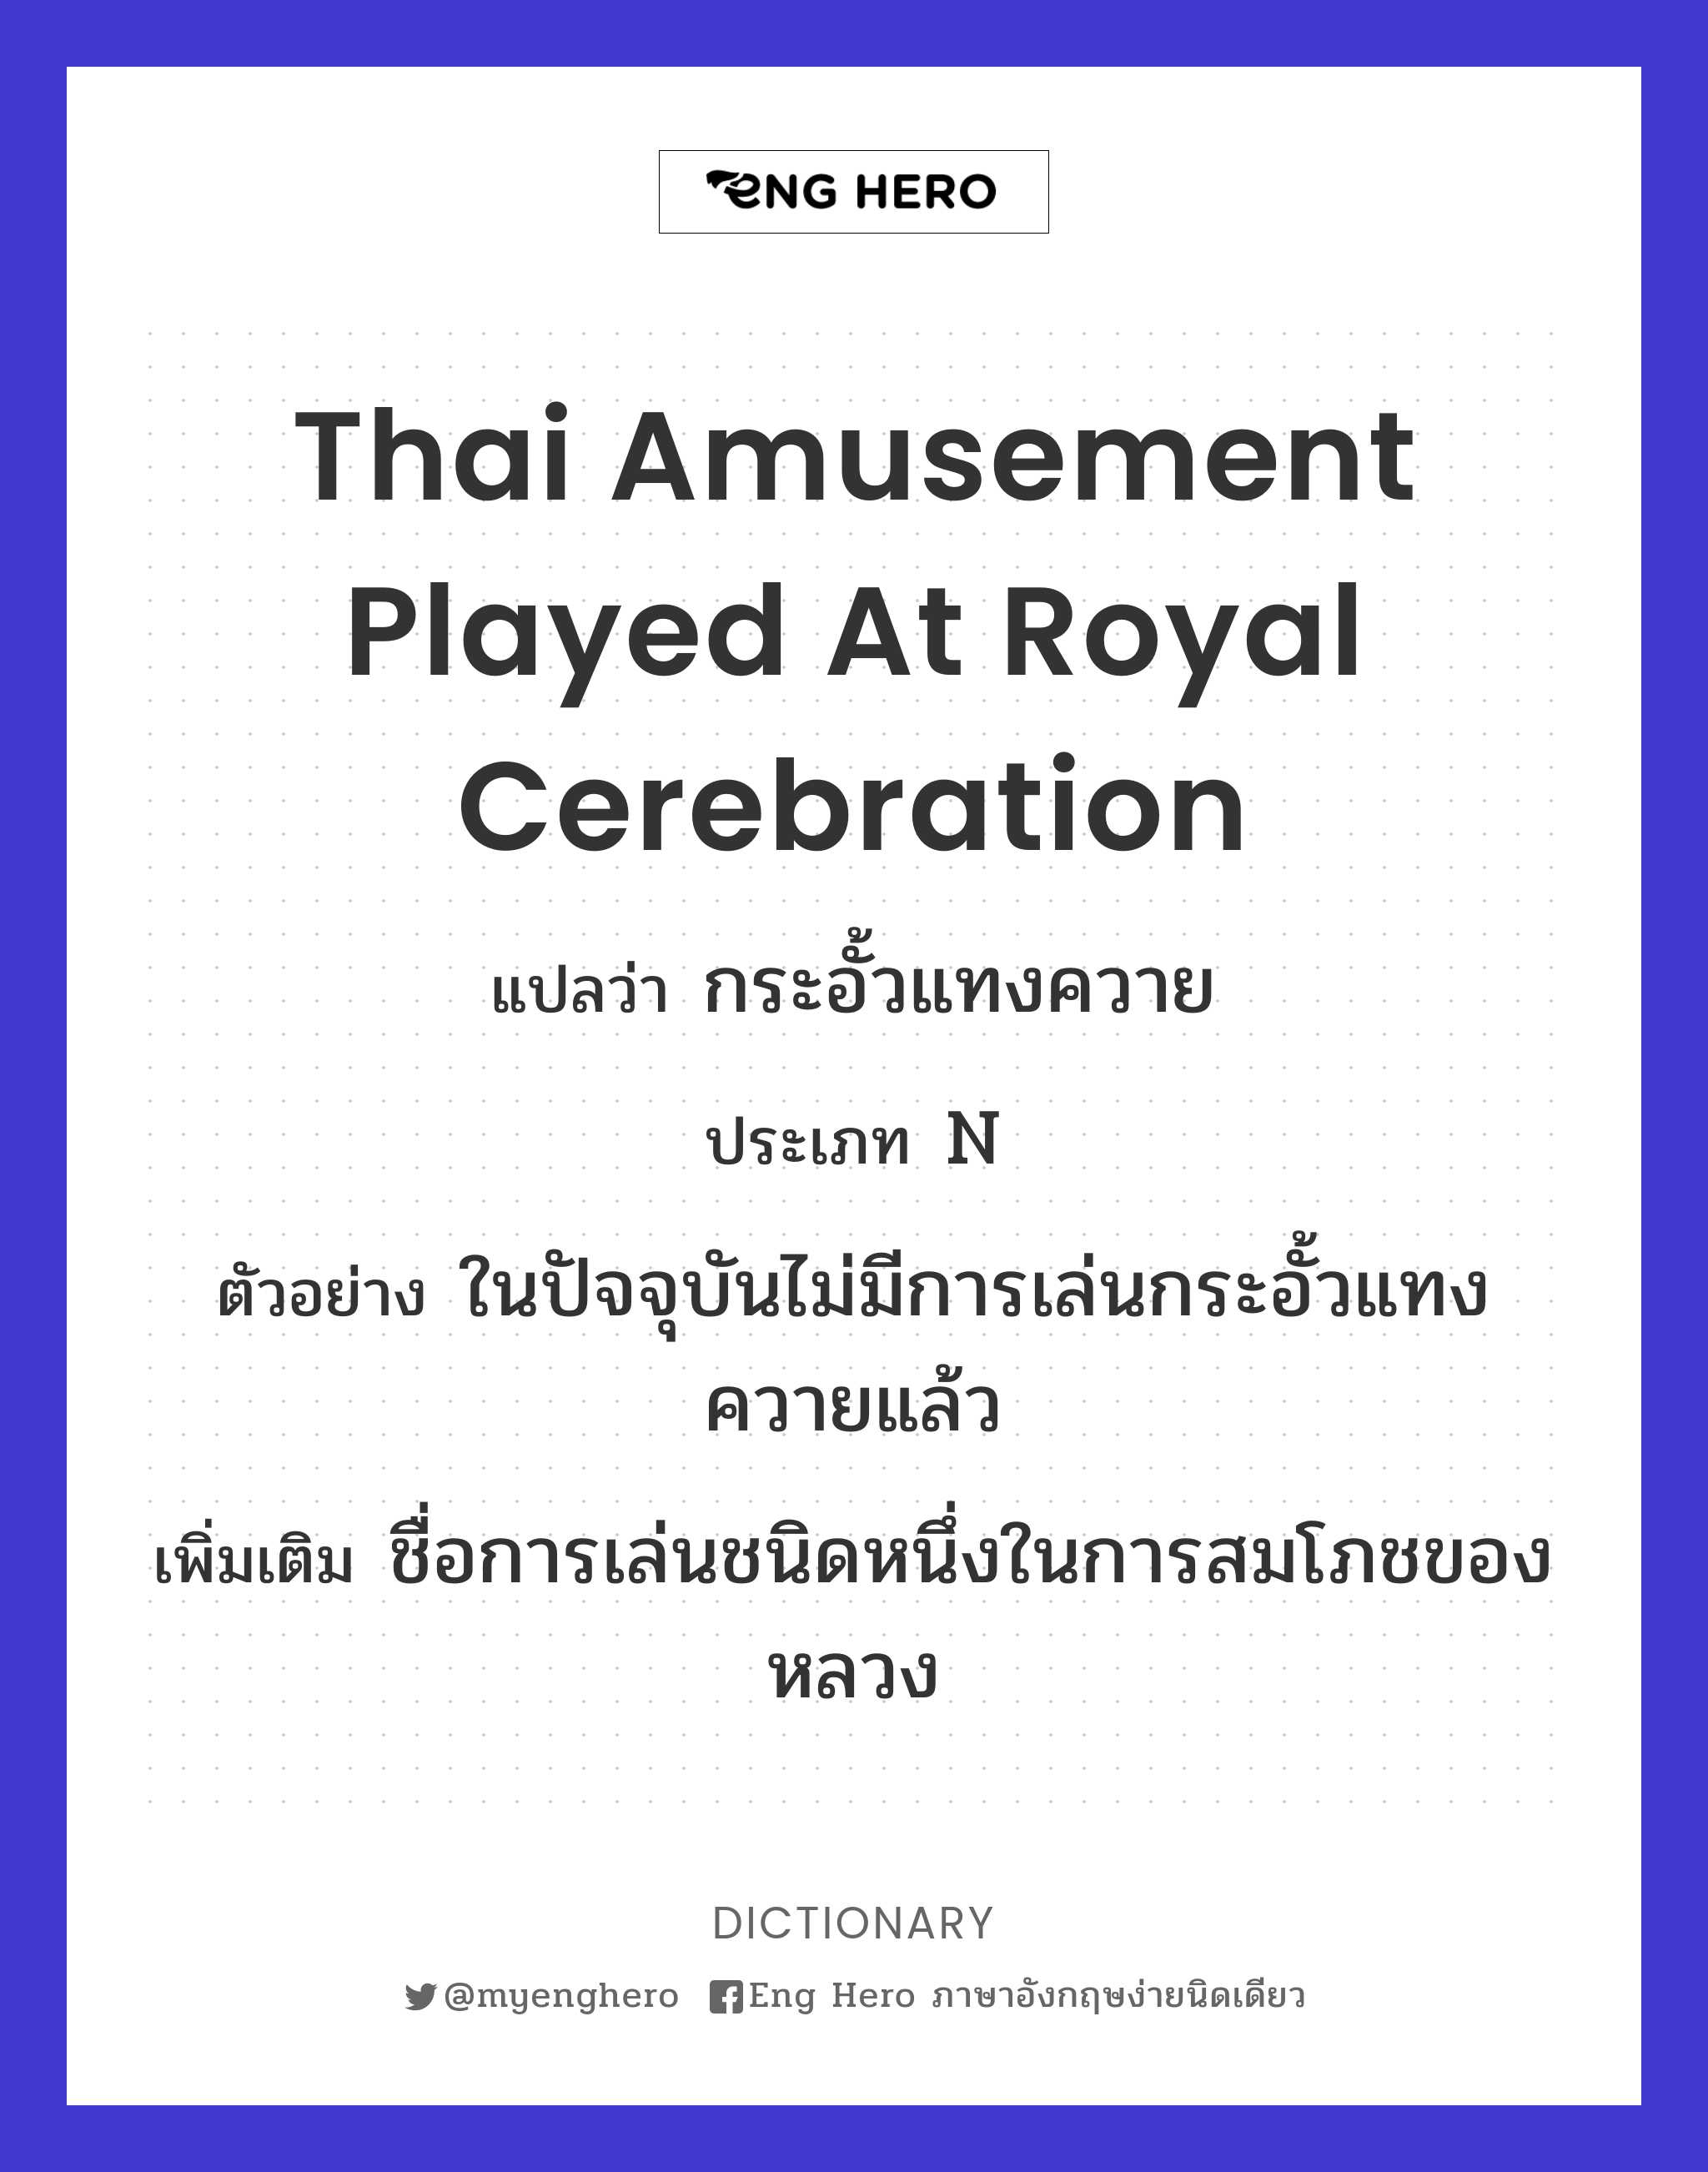 Thai amusement played at royal cerebration